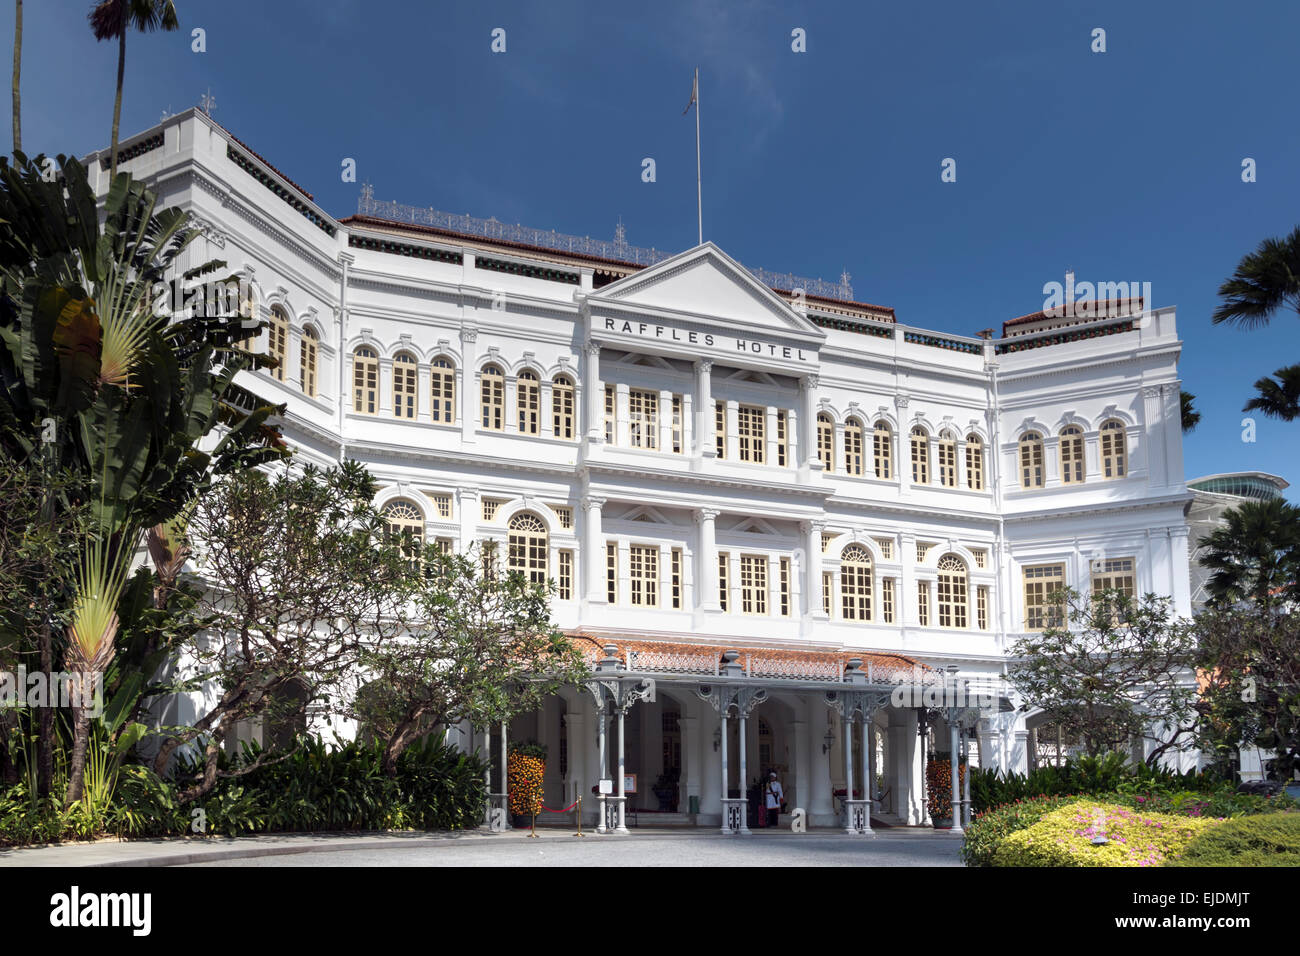 Raffles Hotel in Singapore Stock Photo